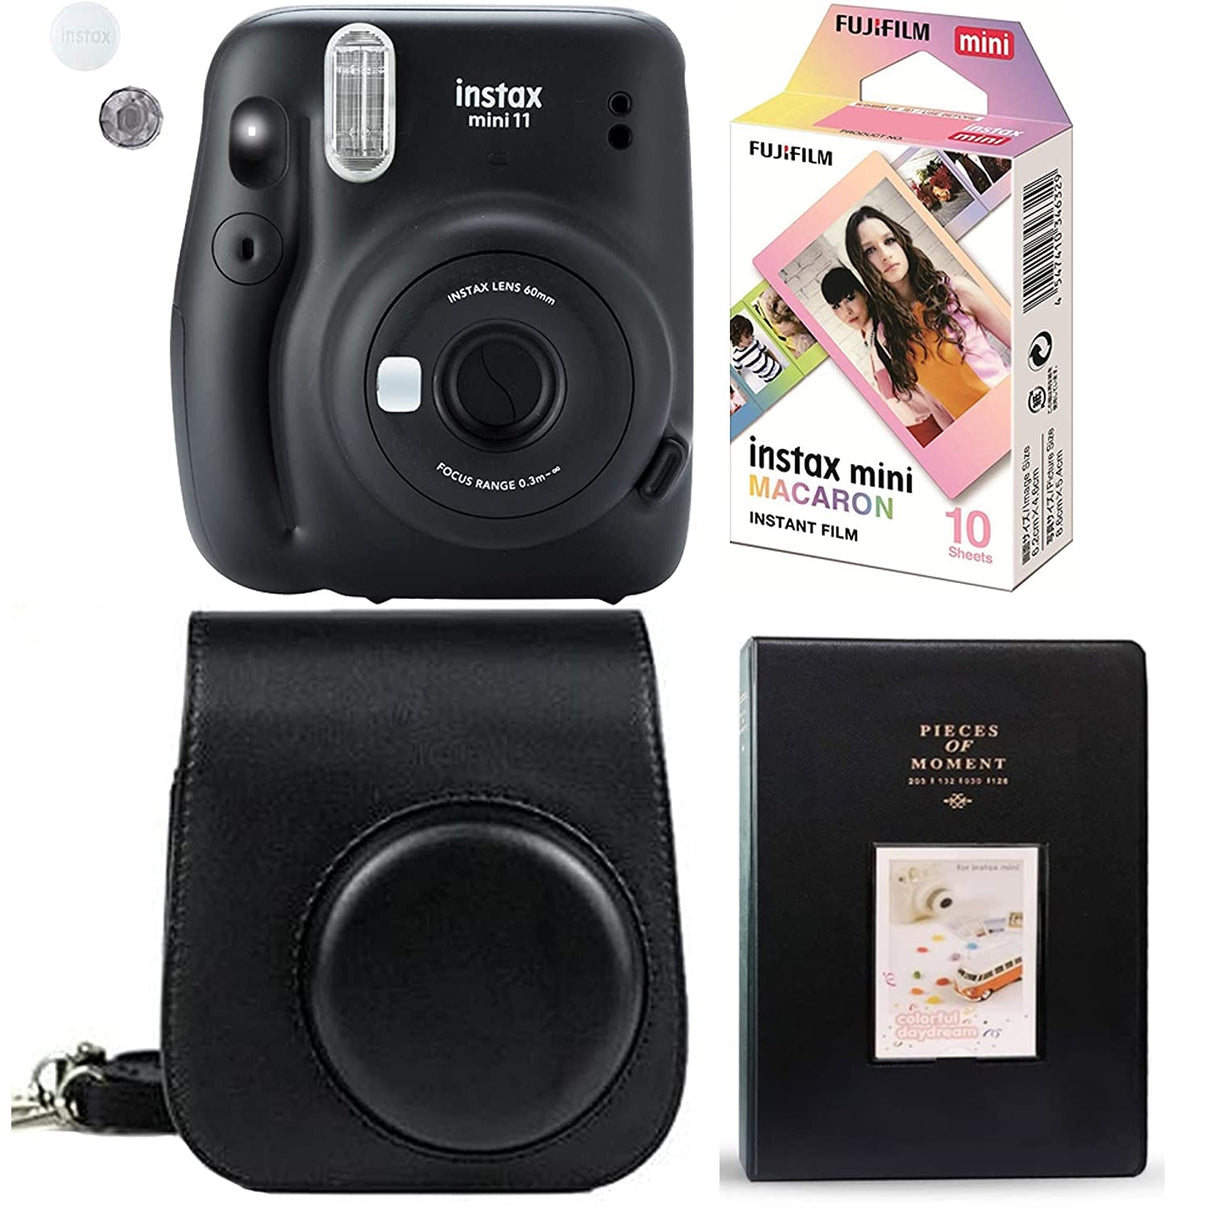 Fujifilm Instant Mini 11 Charcoal Grey Instant Camera Plus Matching Case, Photo Album and Fujifilm Character 10 Films (Macaron)